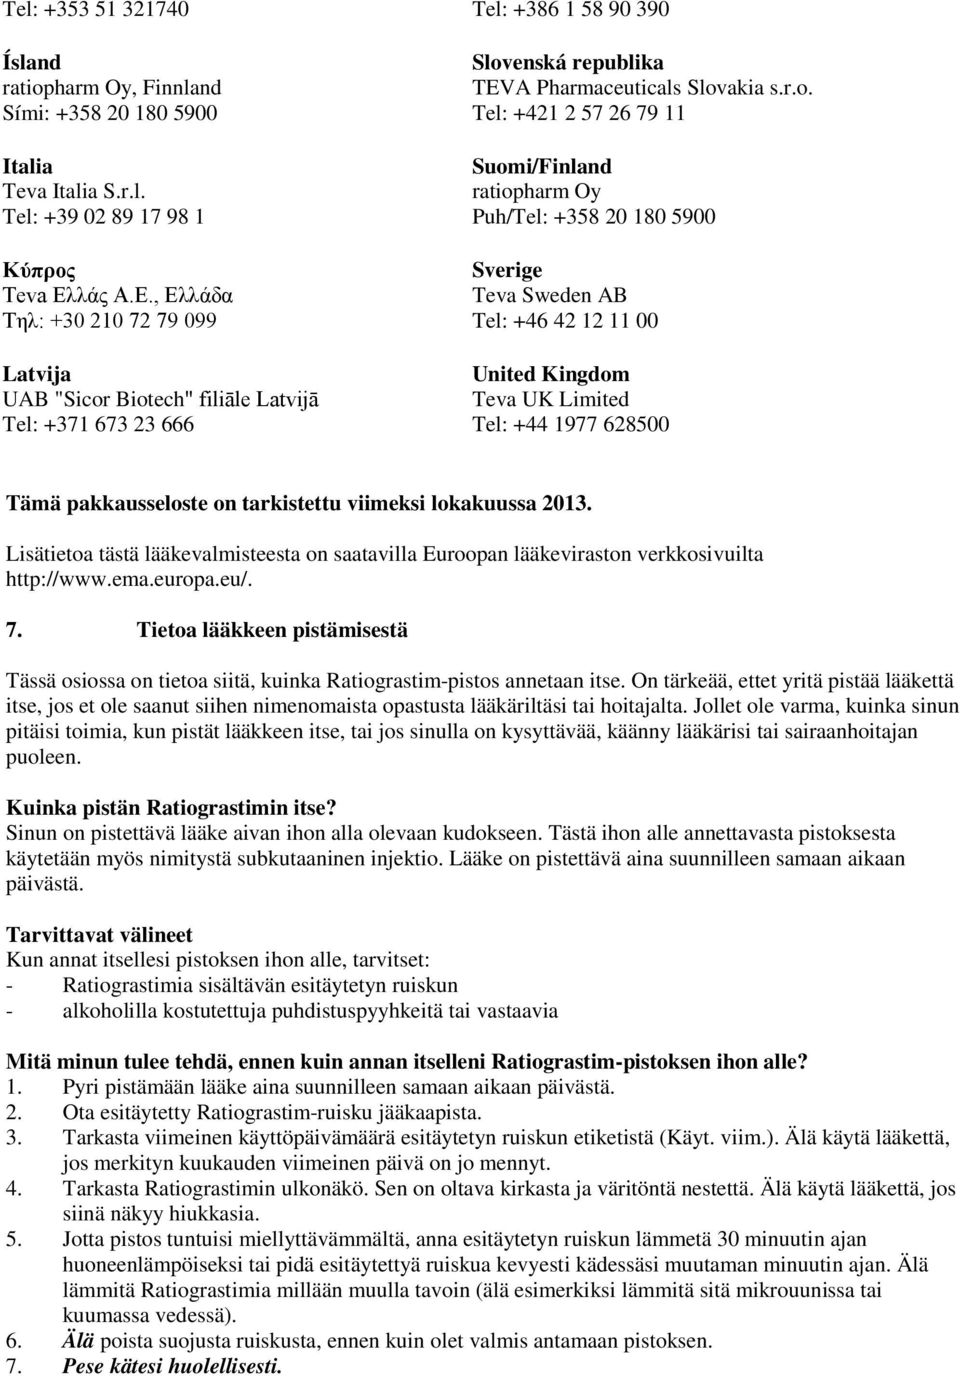 Biotech" filiāle Latvijā Tel: +371 673 23 666 Slovenská republika TEVA Pharmaceuticals Slovakia s.r.o. Tel: +421 2 57 26 79 11 Suomi/Finland ratiopharm Oy Puh/Tel: +358 20 180 5900 Sverige Teva